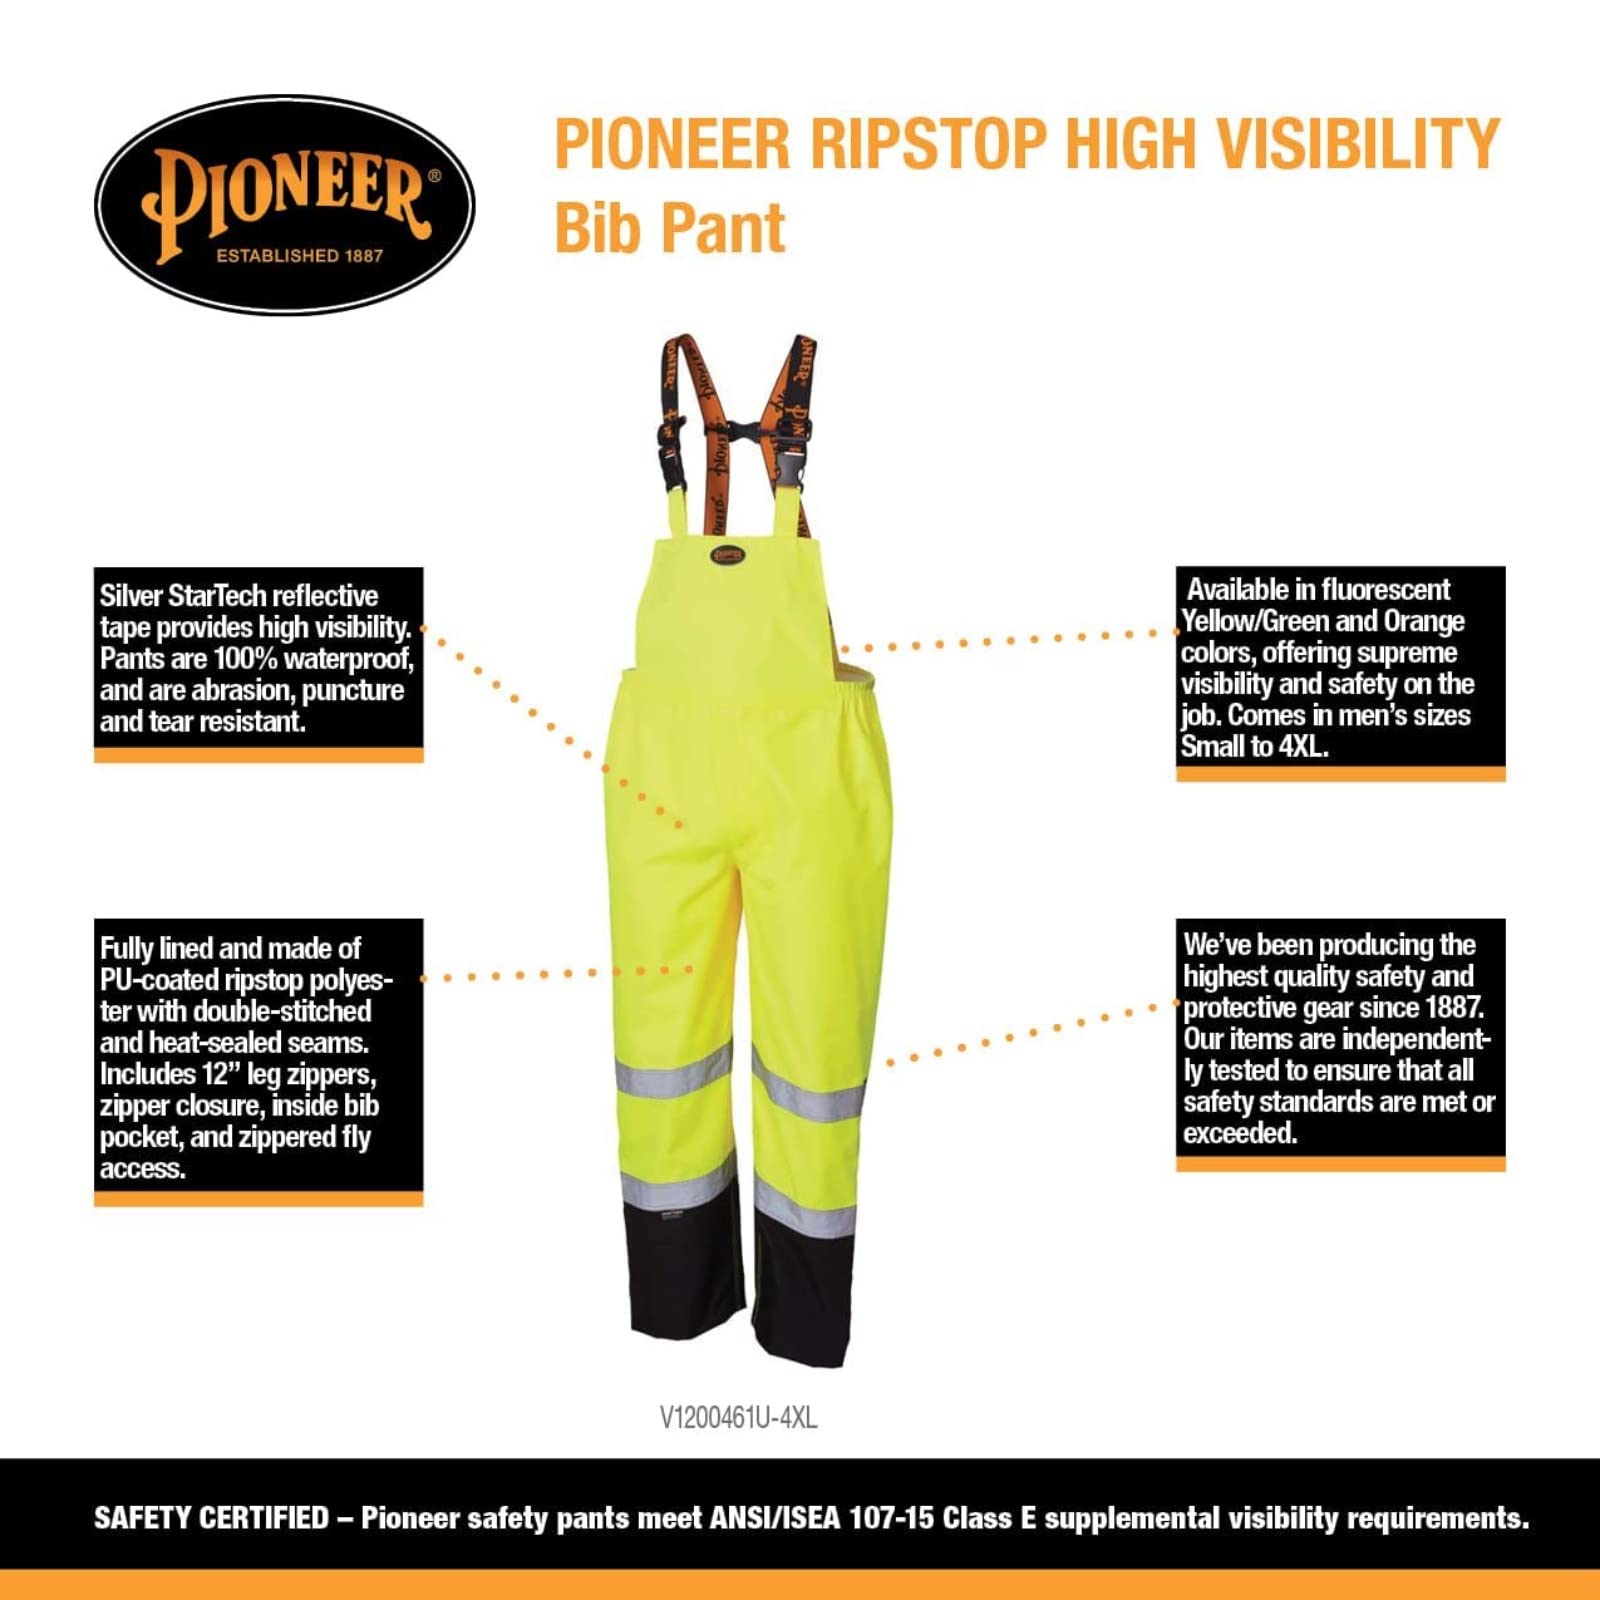 Pioneer Ripstop High Visibility Bib Pan Safety Rain Gear, Hi Vis, Waterproof, Reflective, Work Overalls for Men, Orange, Yellow/Green, V1200461U-2XL